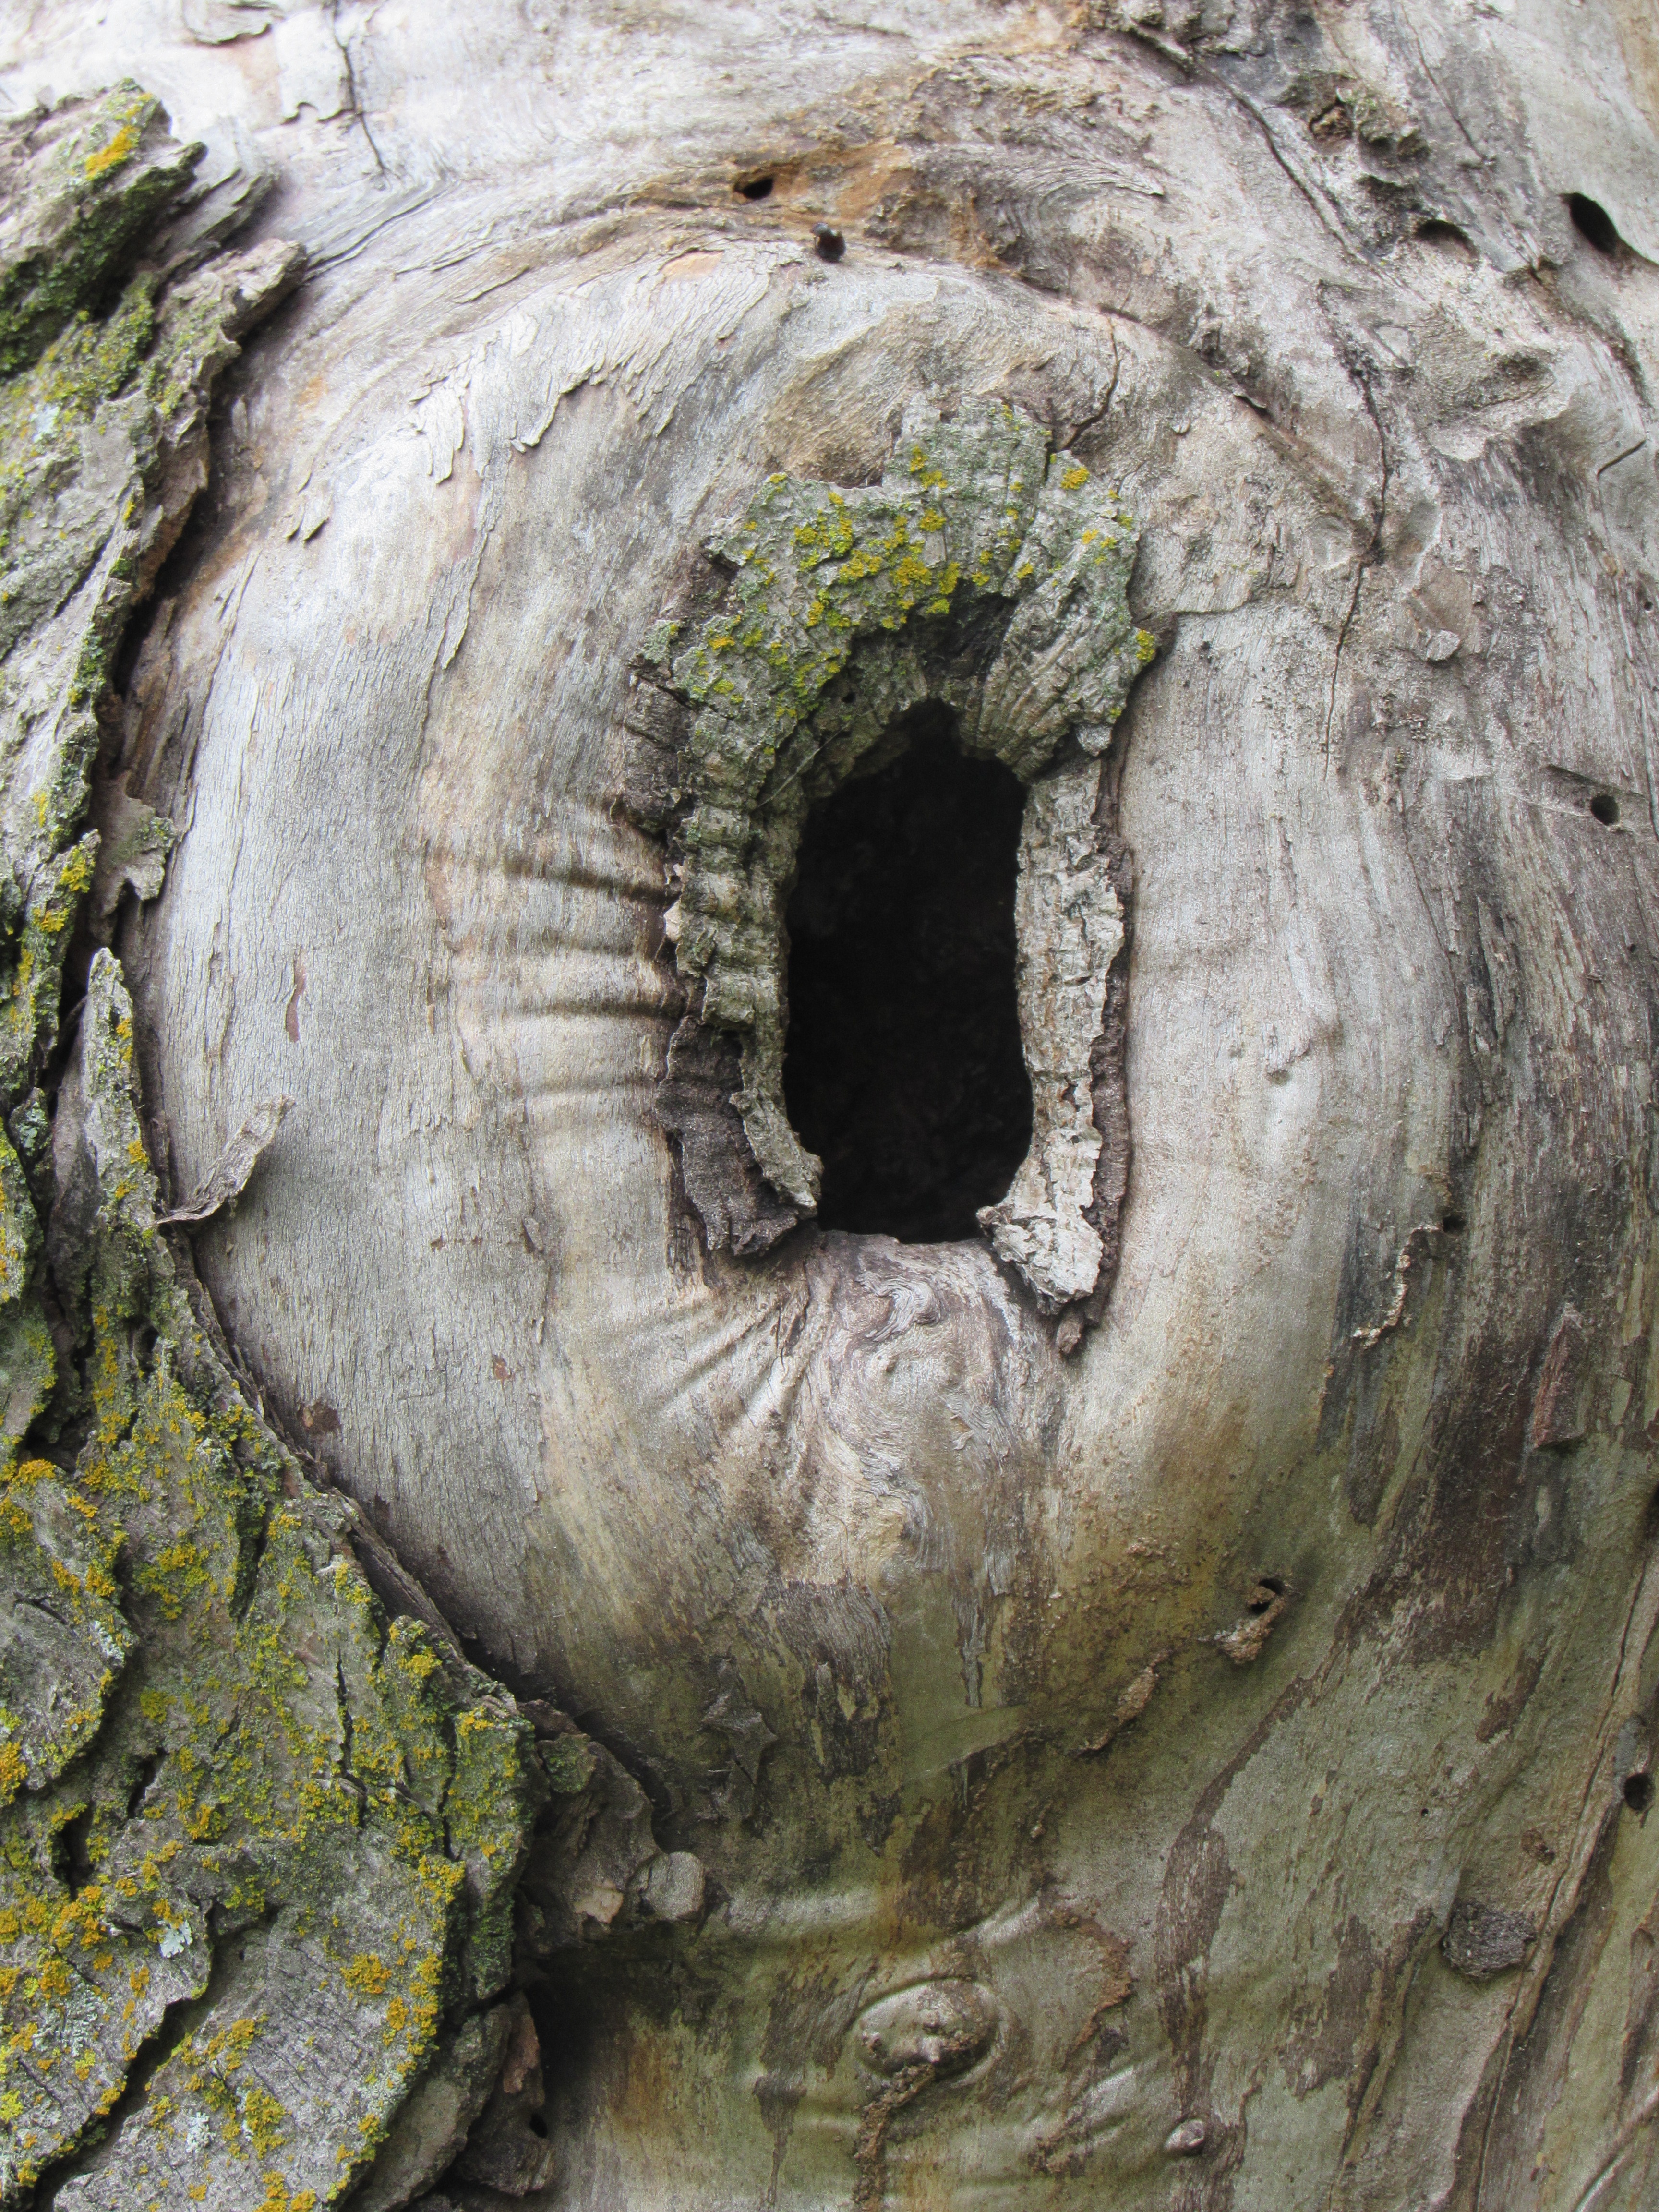 Big tree hole free image download